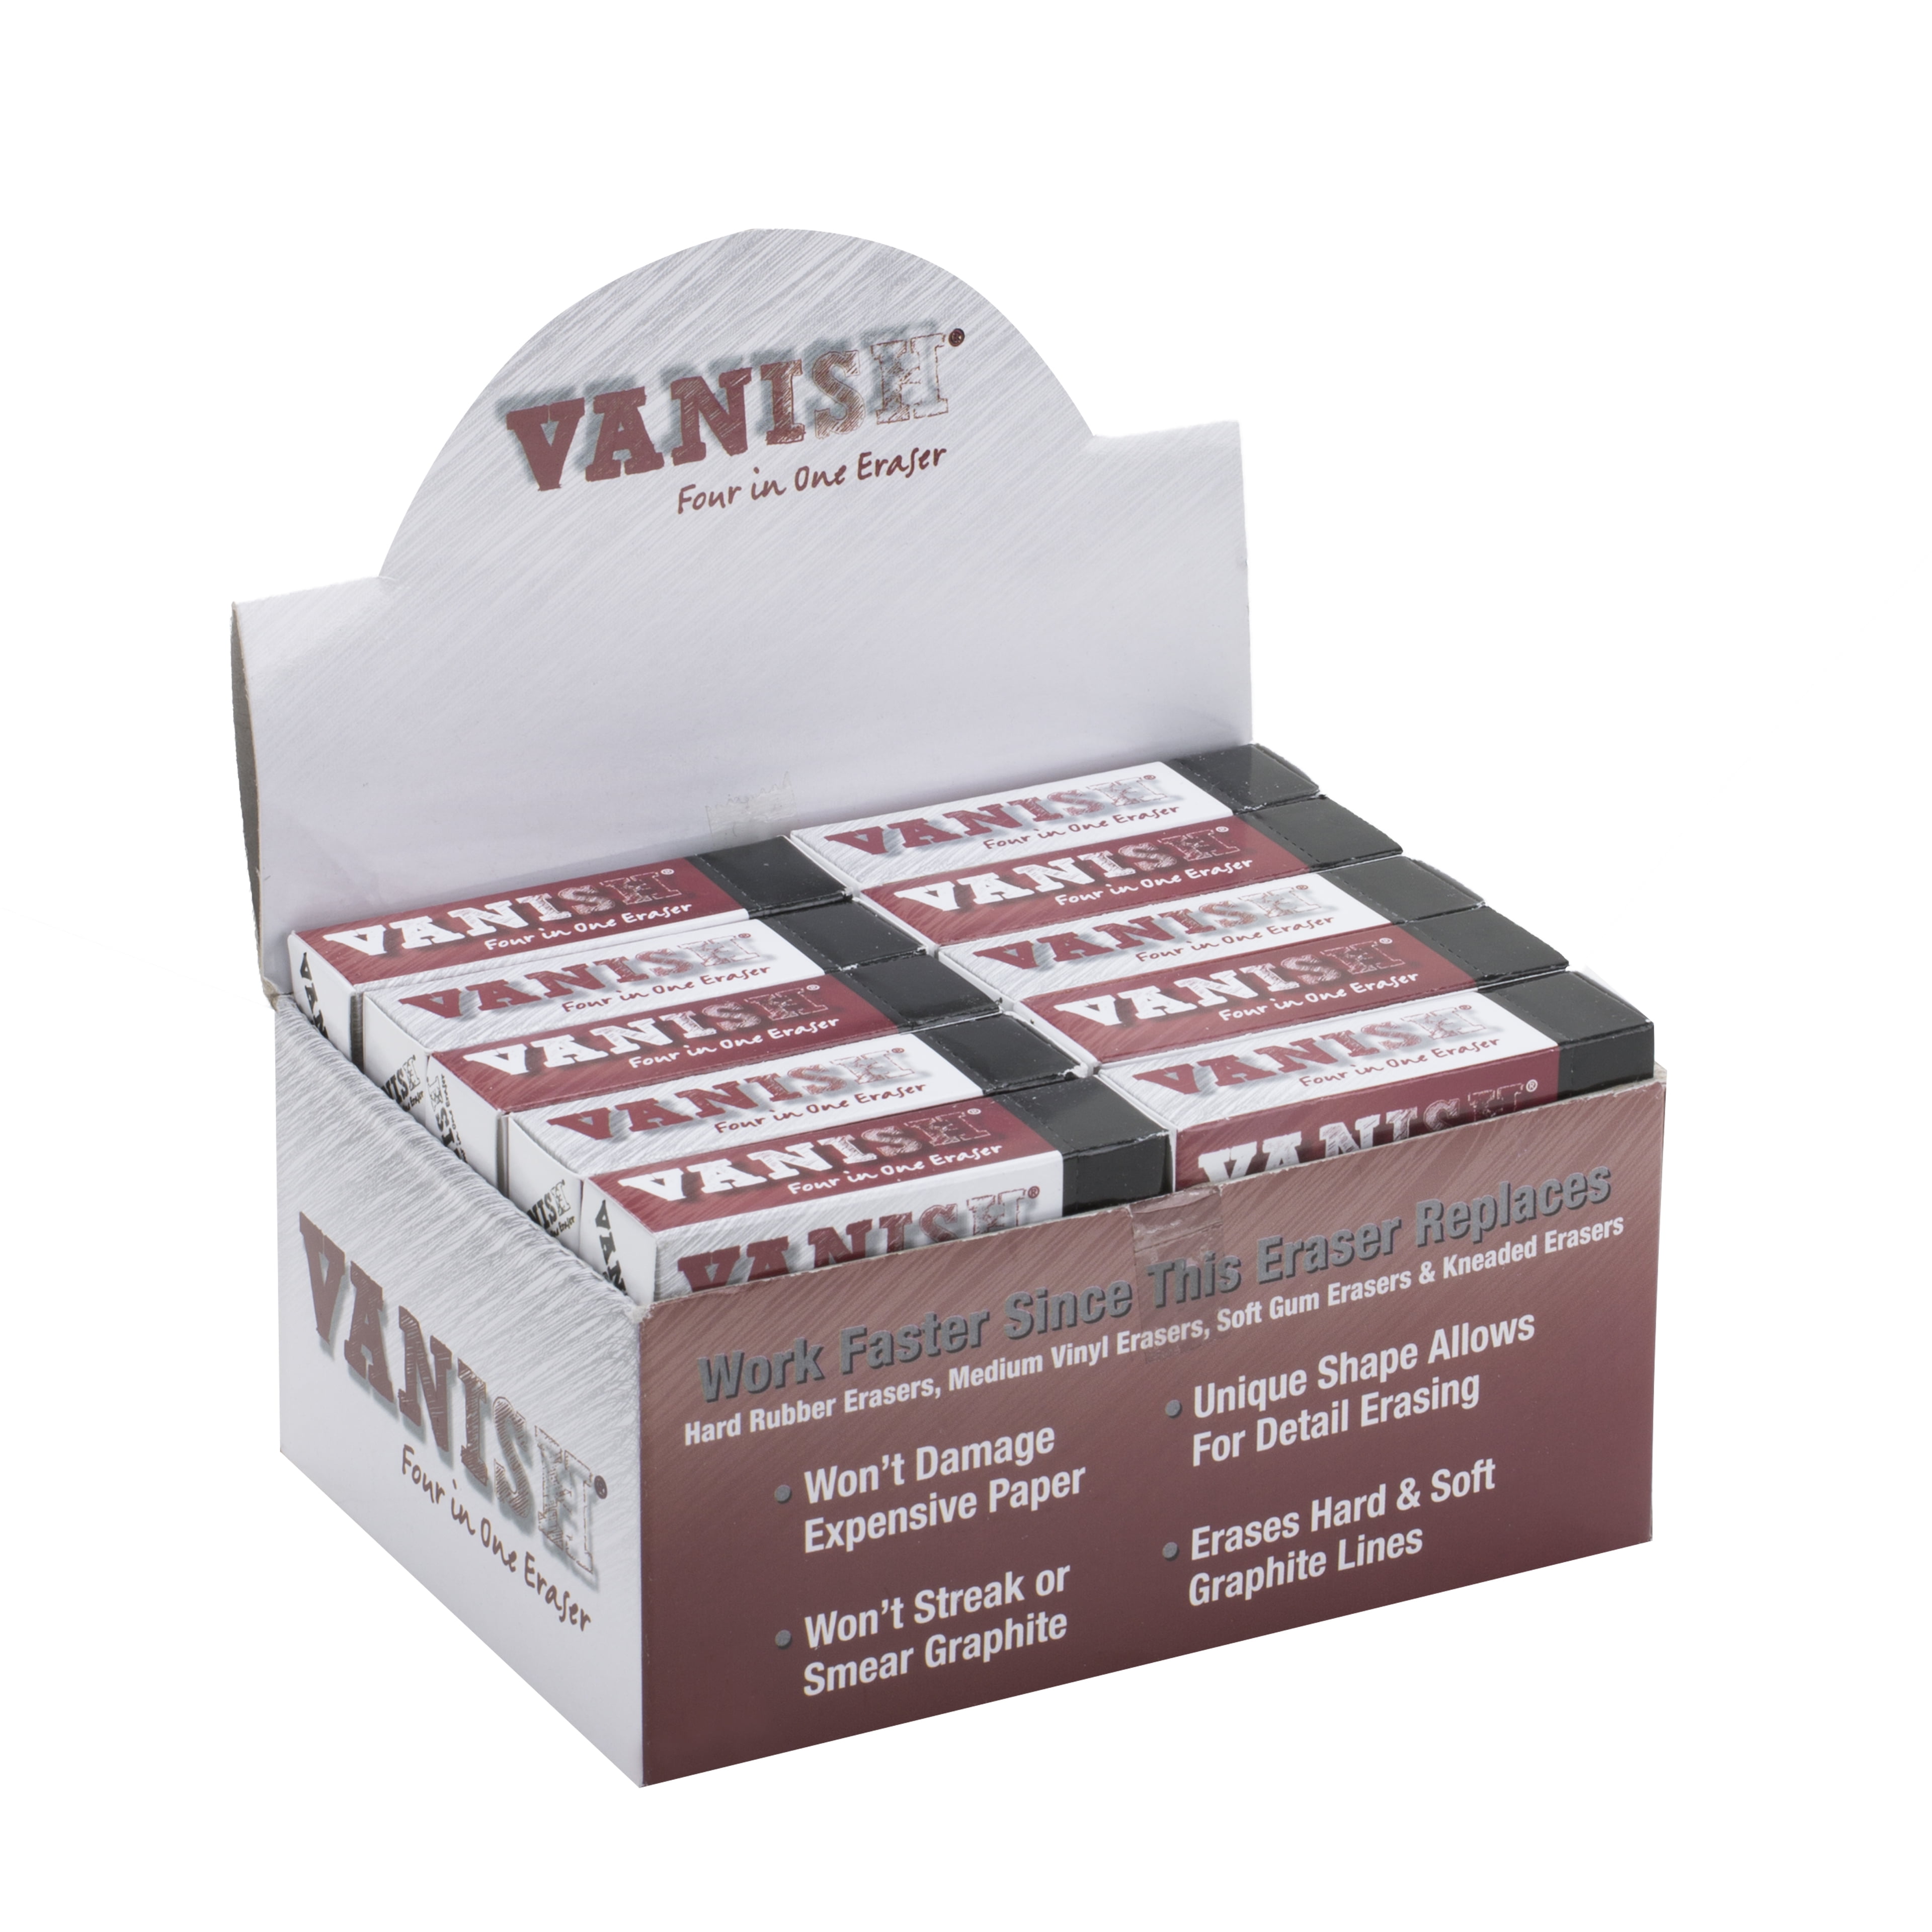 Acurit Vanish Artist Eraser (30 Pack)– 4-in-1 White Erasers for Art -  Erases Graphite Lines - Replaces Vinyl & Kneaded Erasers 